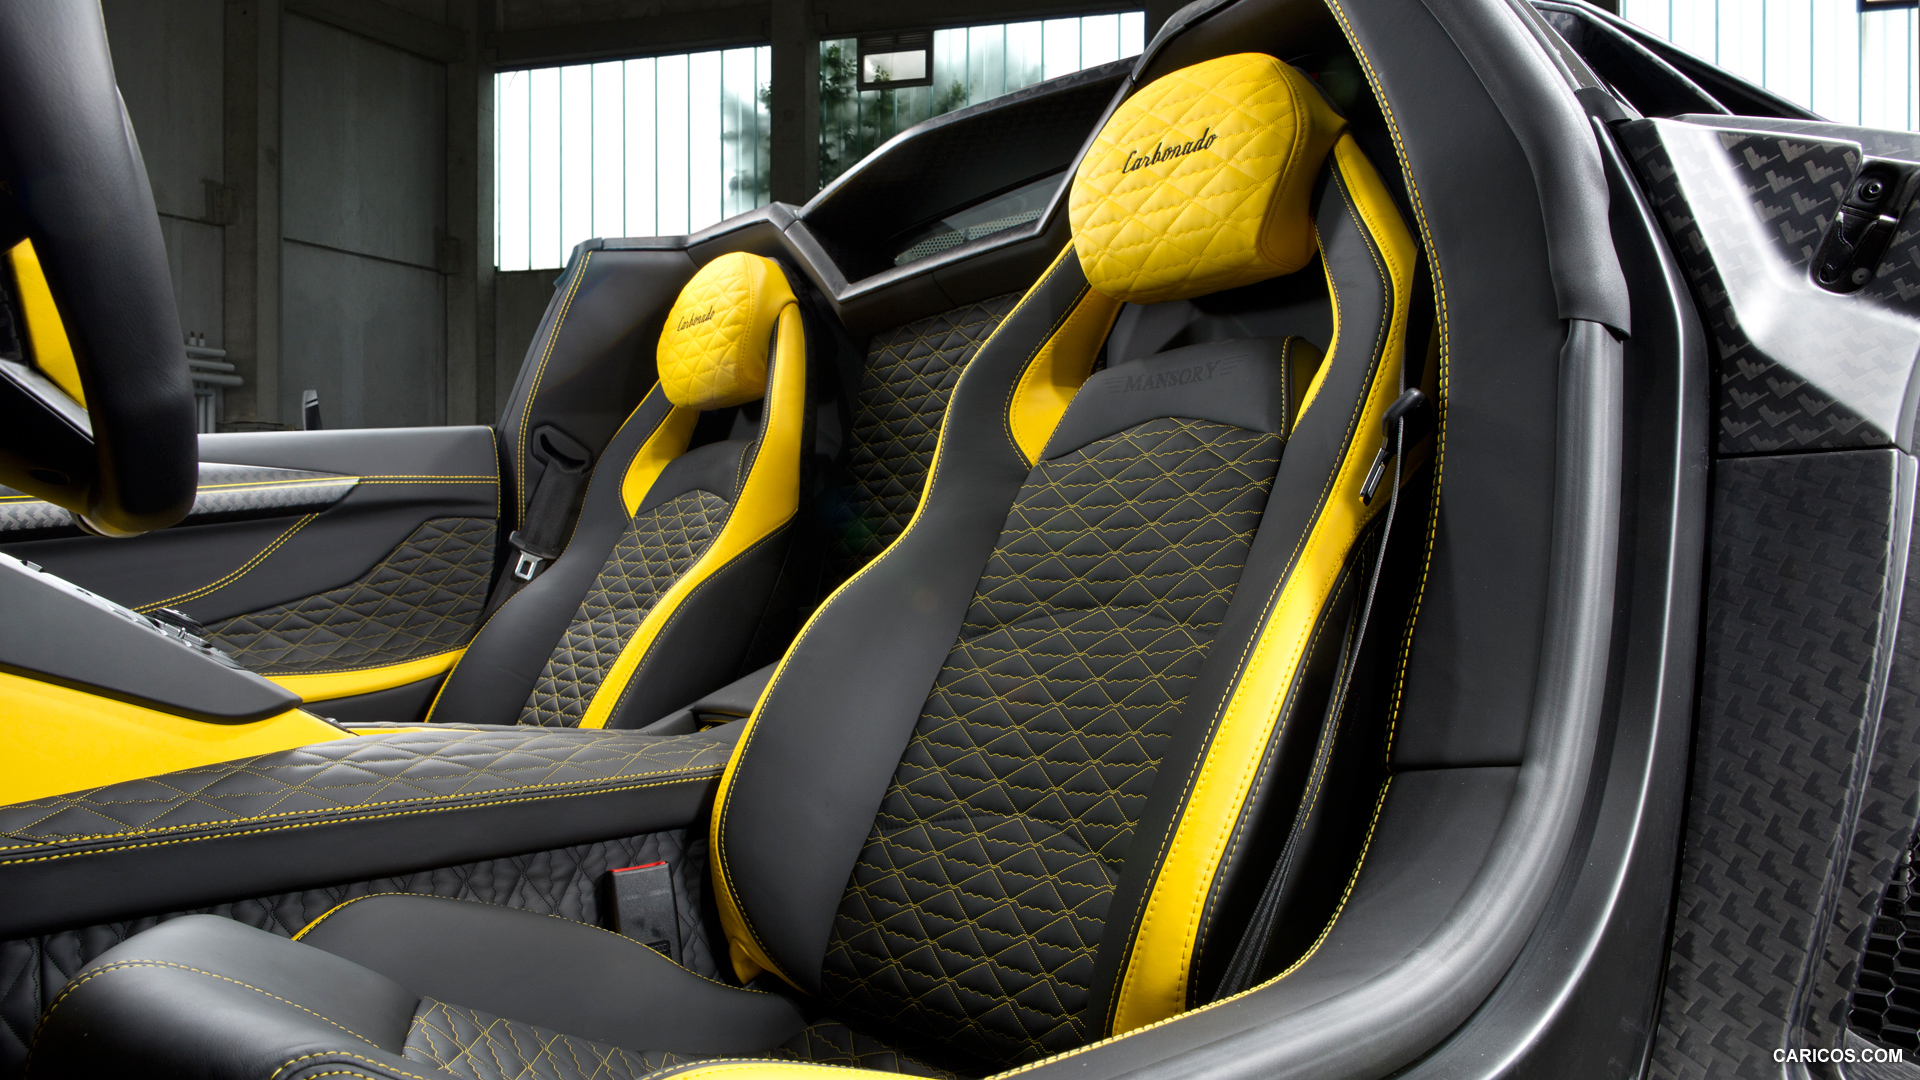 2014 Mansory Carbonado Apertos based on Lamborghini Aventador Roadster  - Interior, #5 of 8